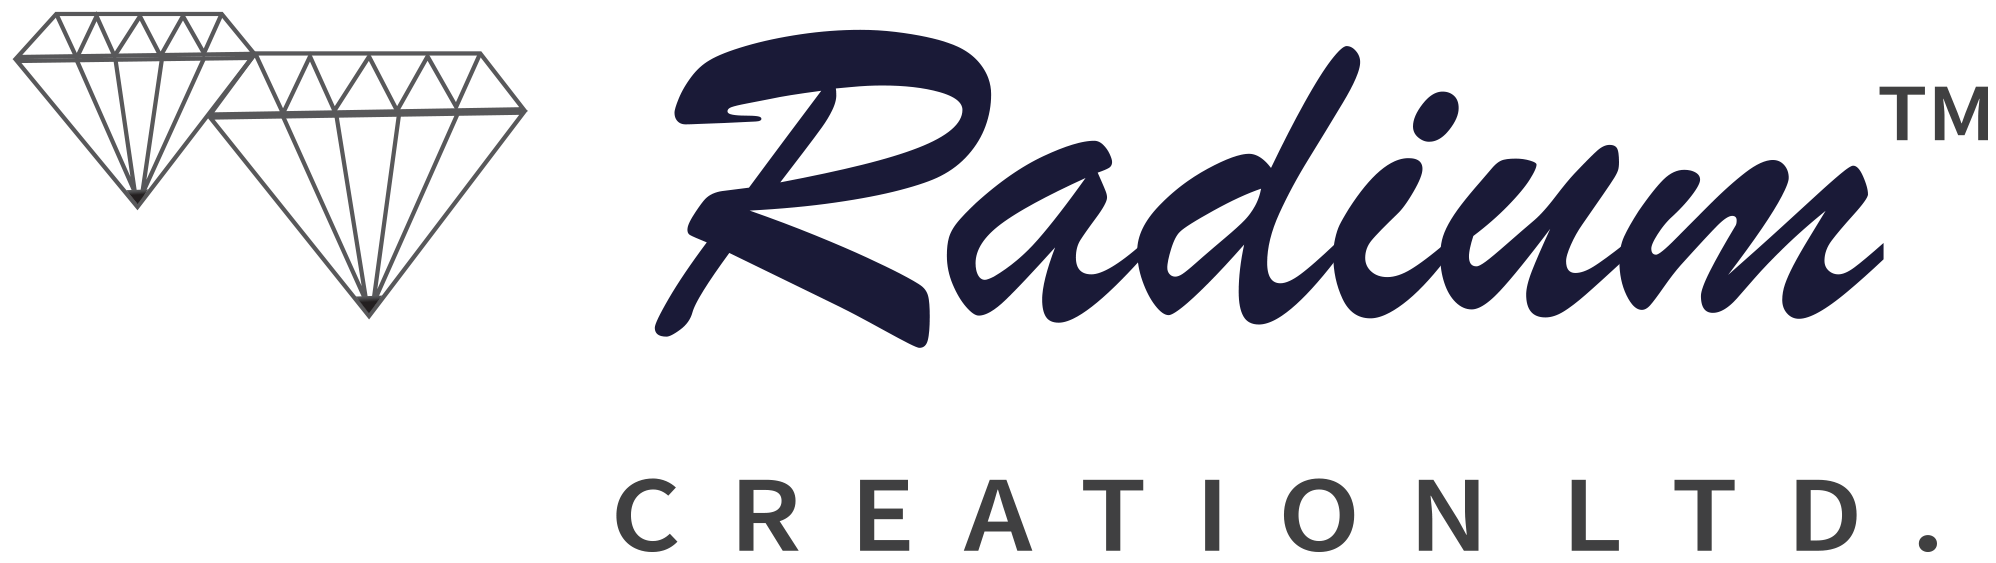 Radium Creation